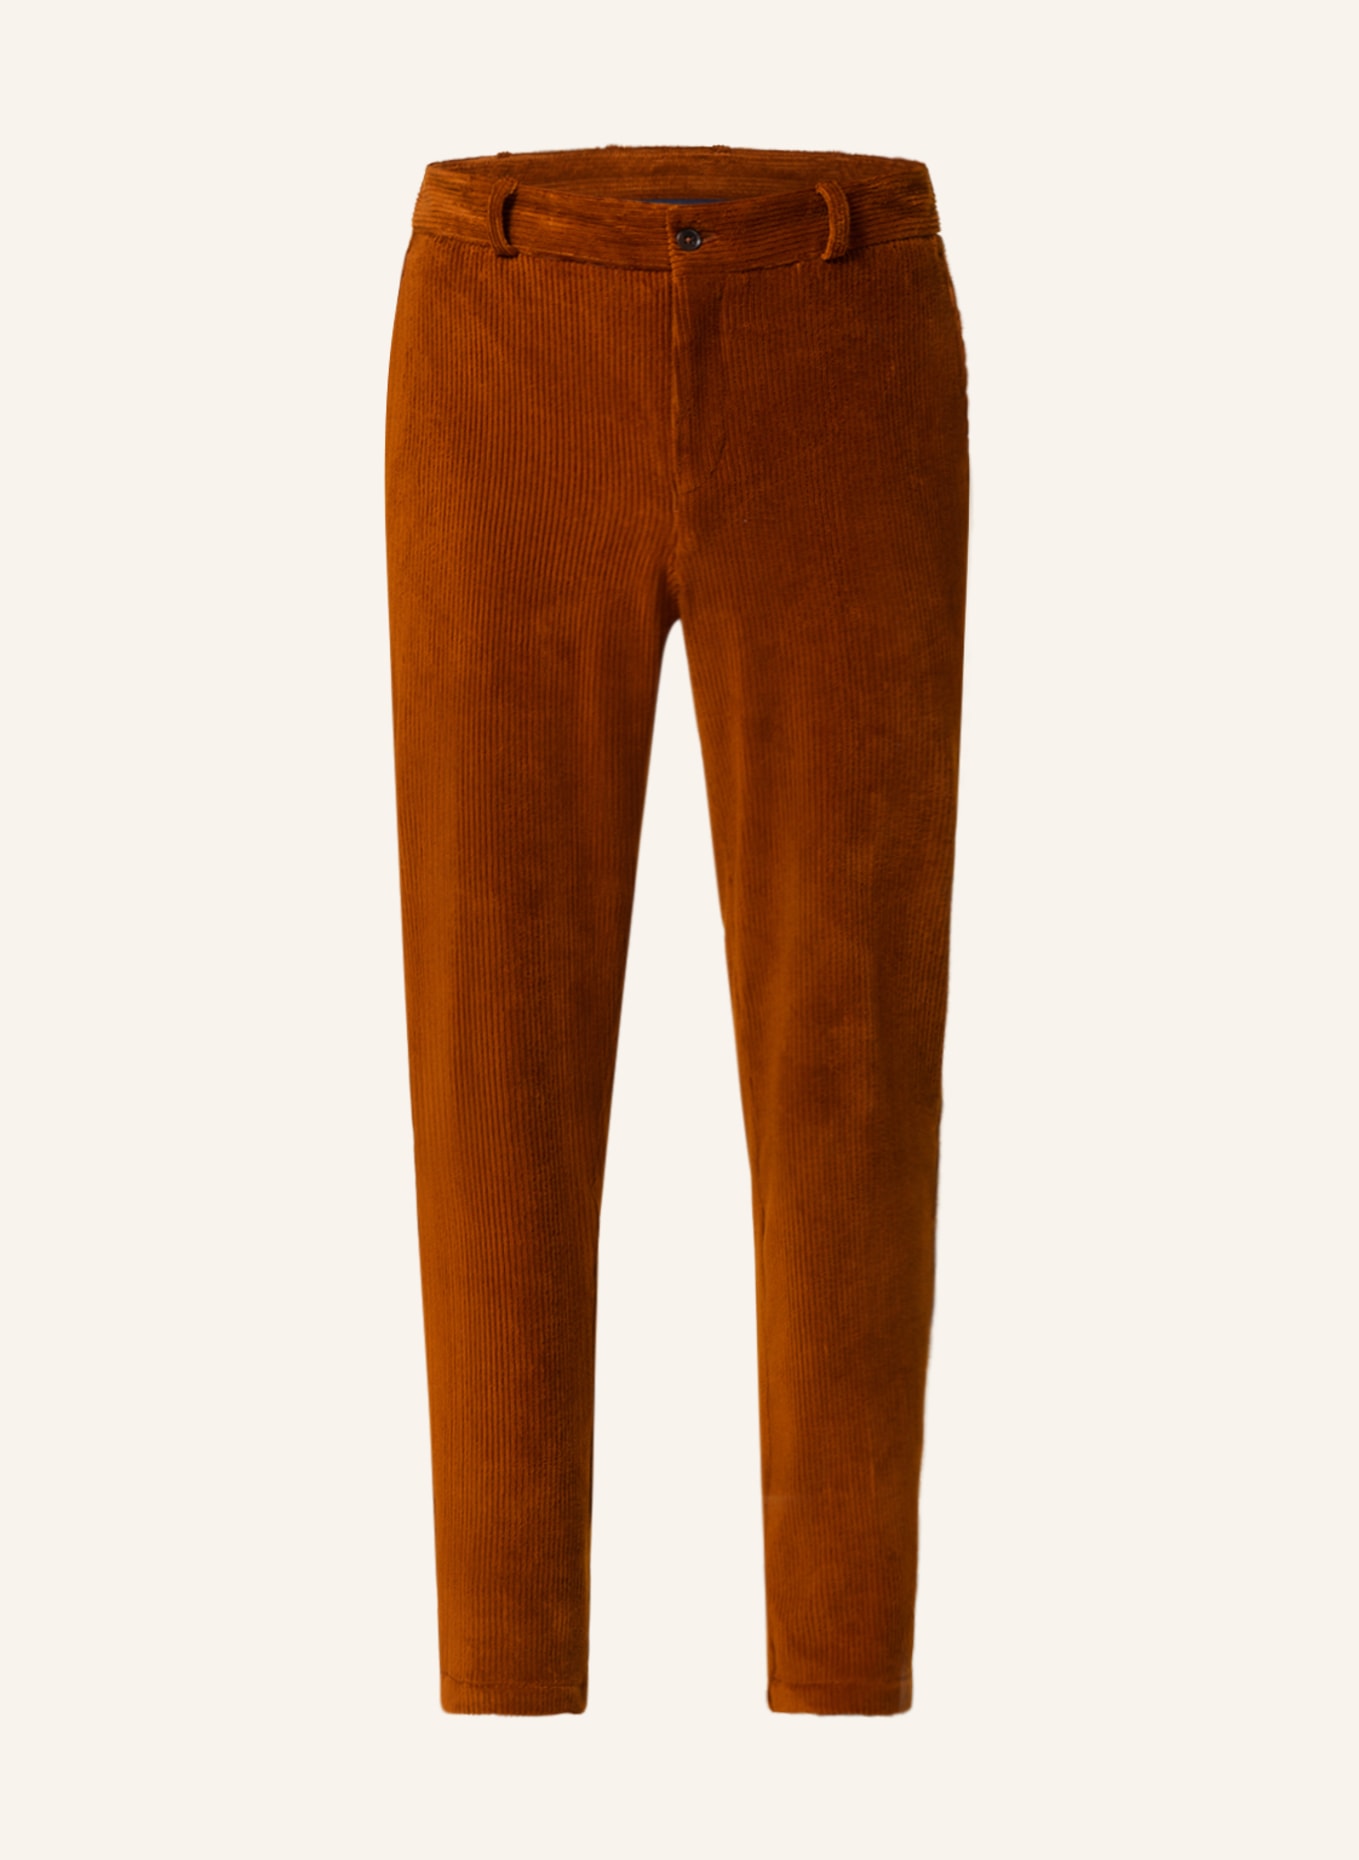 PAUL Anzughose Slim Fit aus Cord, Farbe: COGNAC (Bild 1)